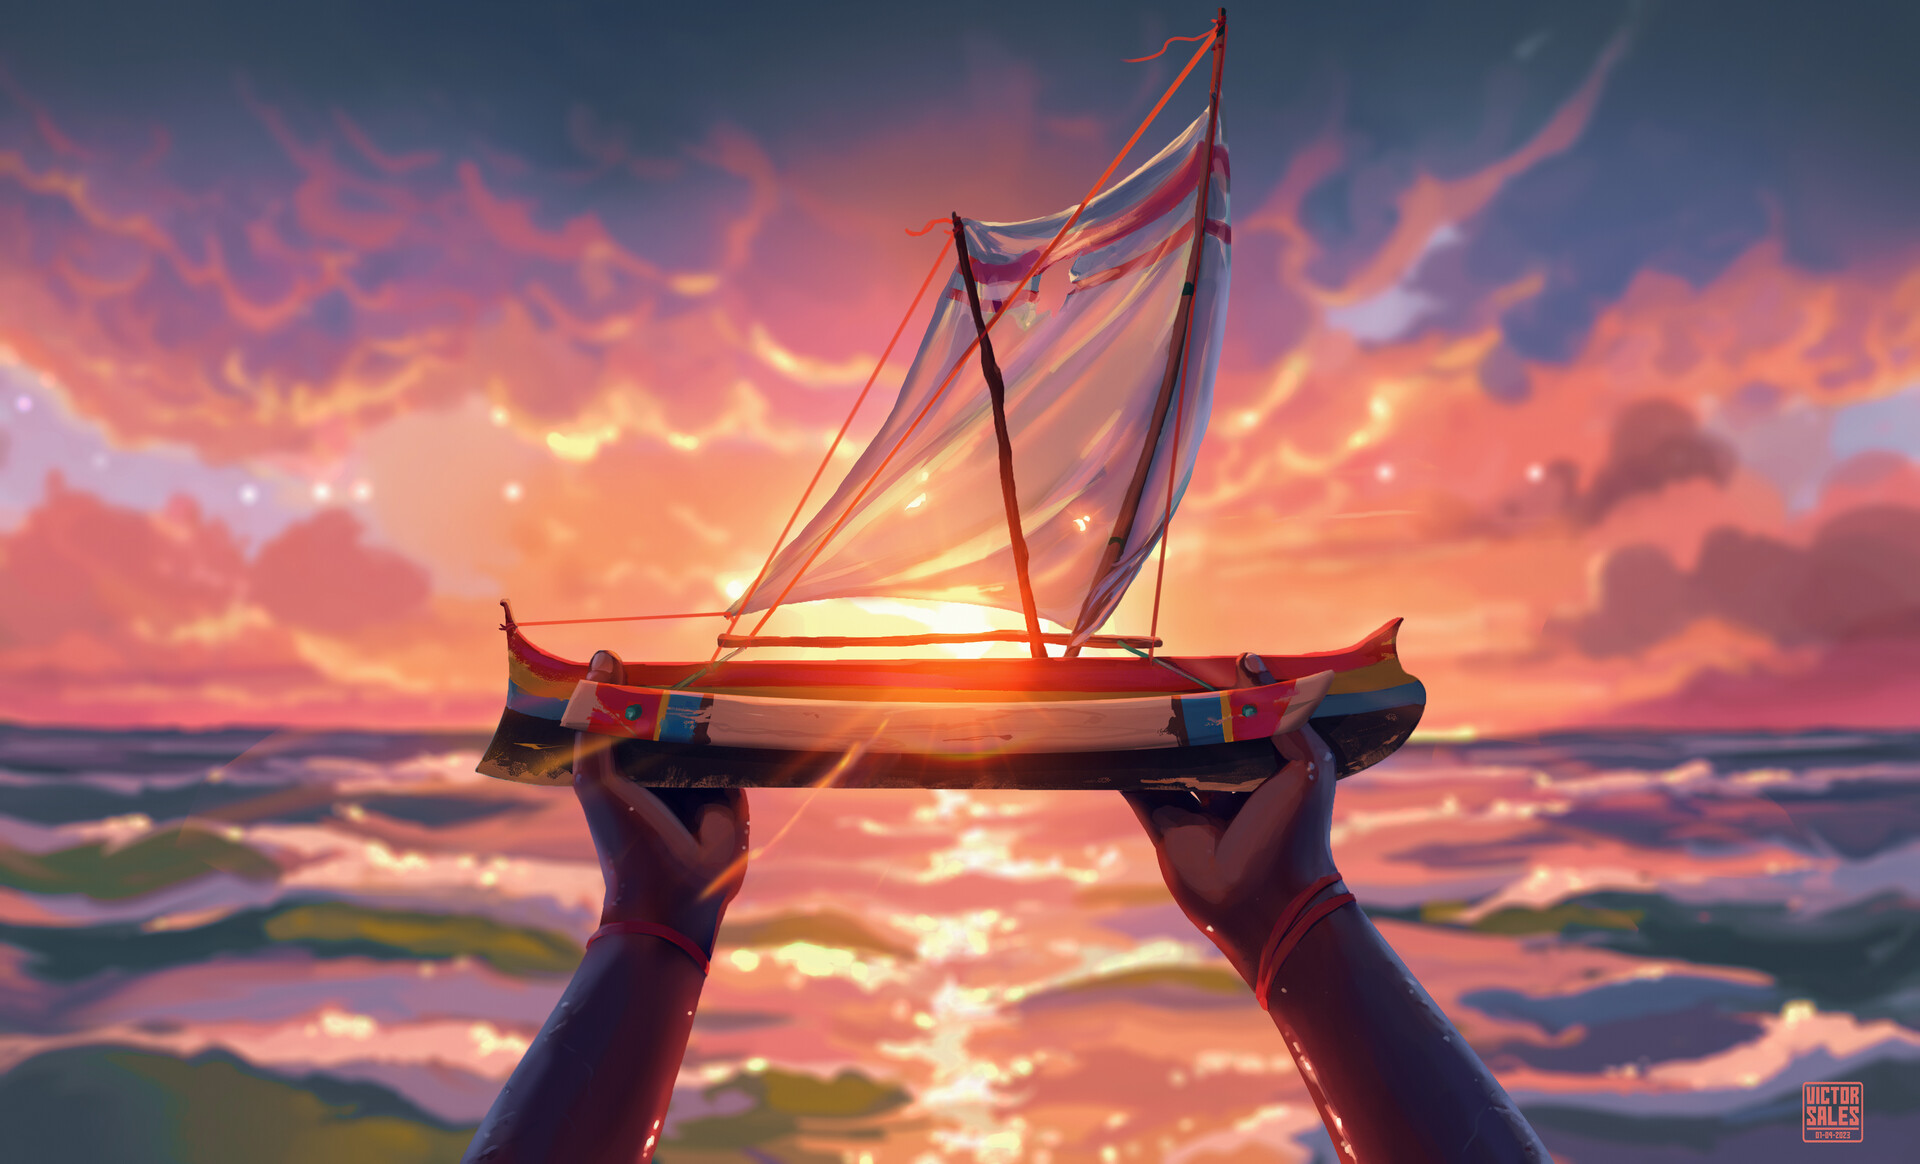 Victor Sales Digital Art Fantasy Art Water ArtStation Boat Landscape Sunset Clouds Sunset Glow Sunli 1920x1164